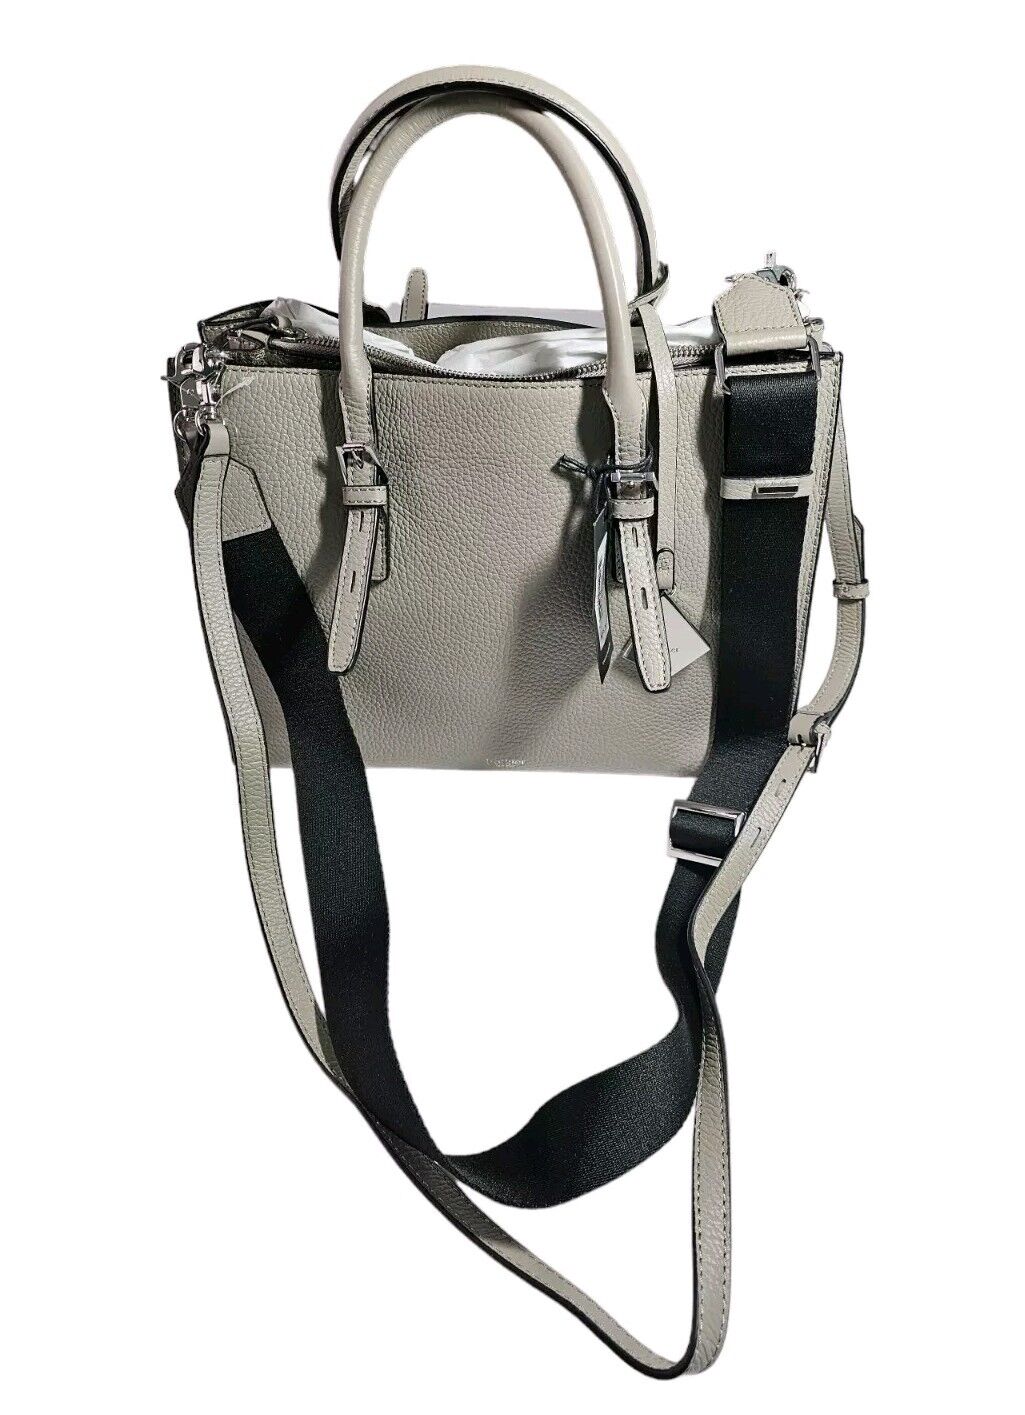 Botkier Womens Crossbody Bag Morgan Tote Gray Leather New 2 Detachable Straps